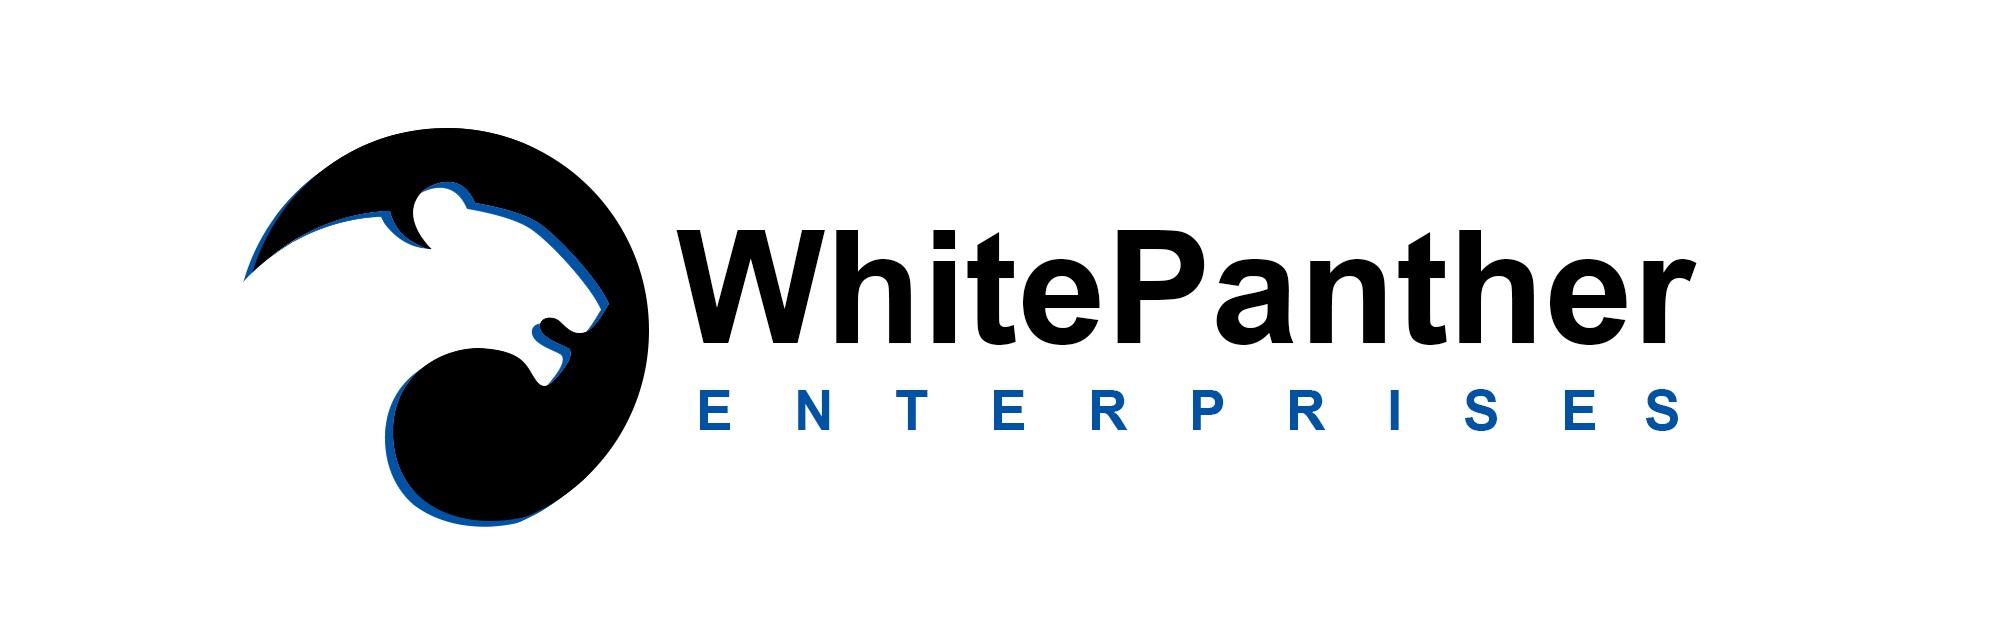 White Panther Logo - Digital Marketing Agency in Delhi, India | SEO, SMM, PPC